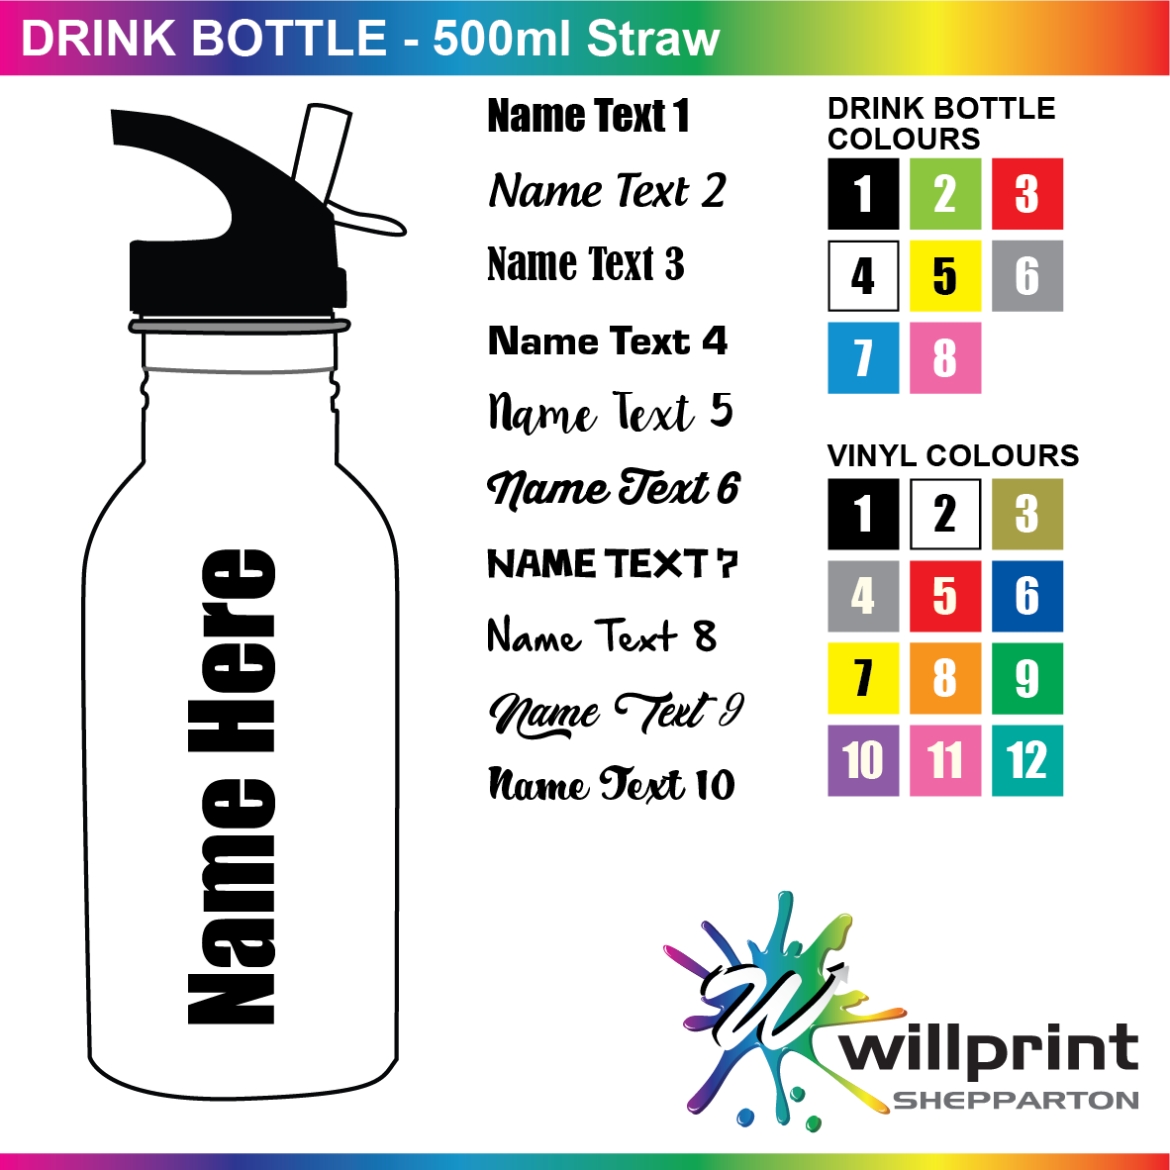 Drink Bottle 500Ml | Willprint Shepparton Regarding Drink Bottle Label Template